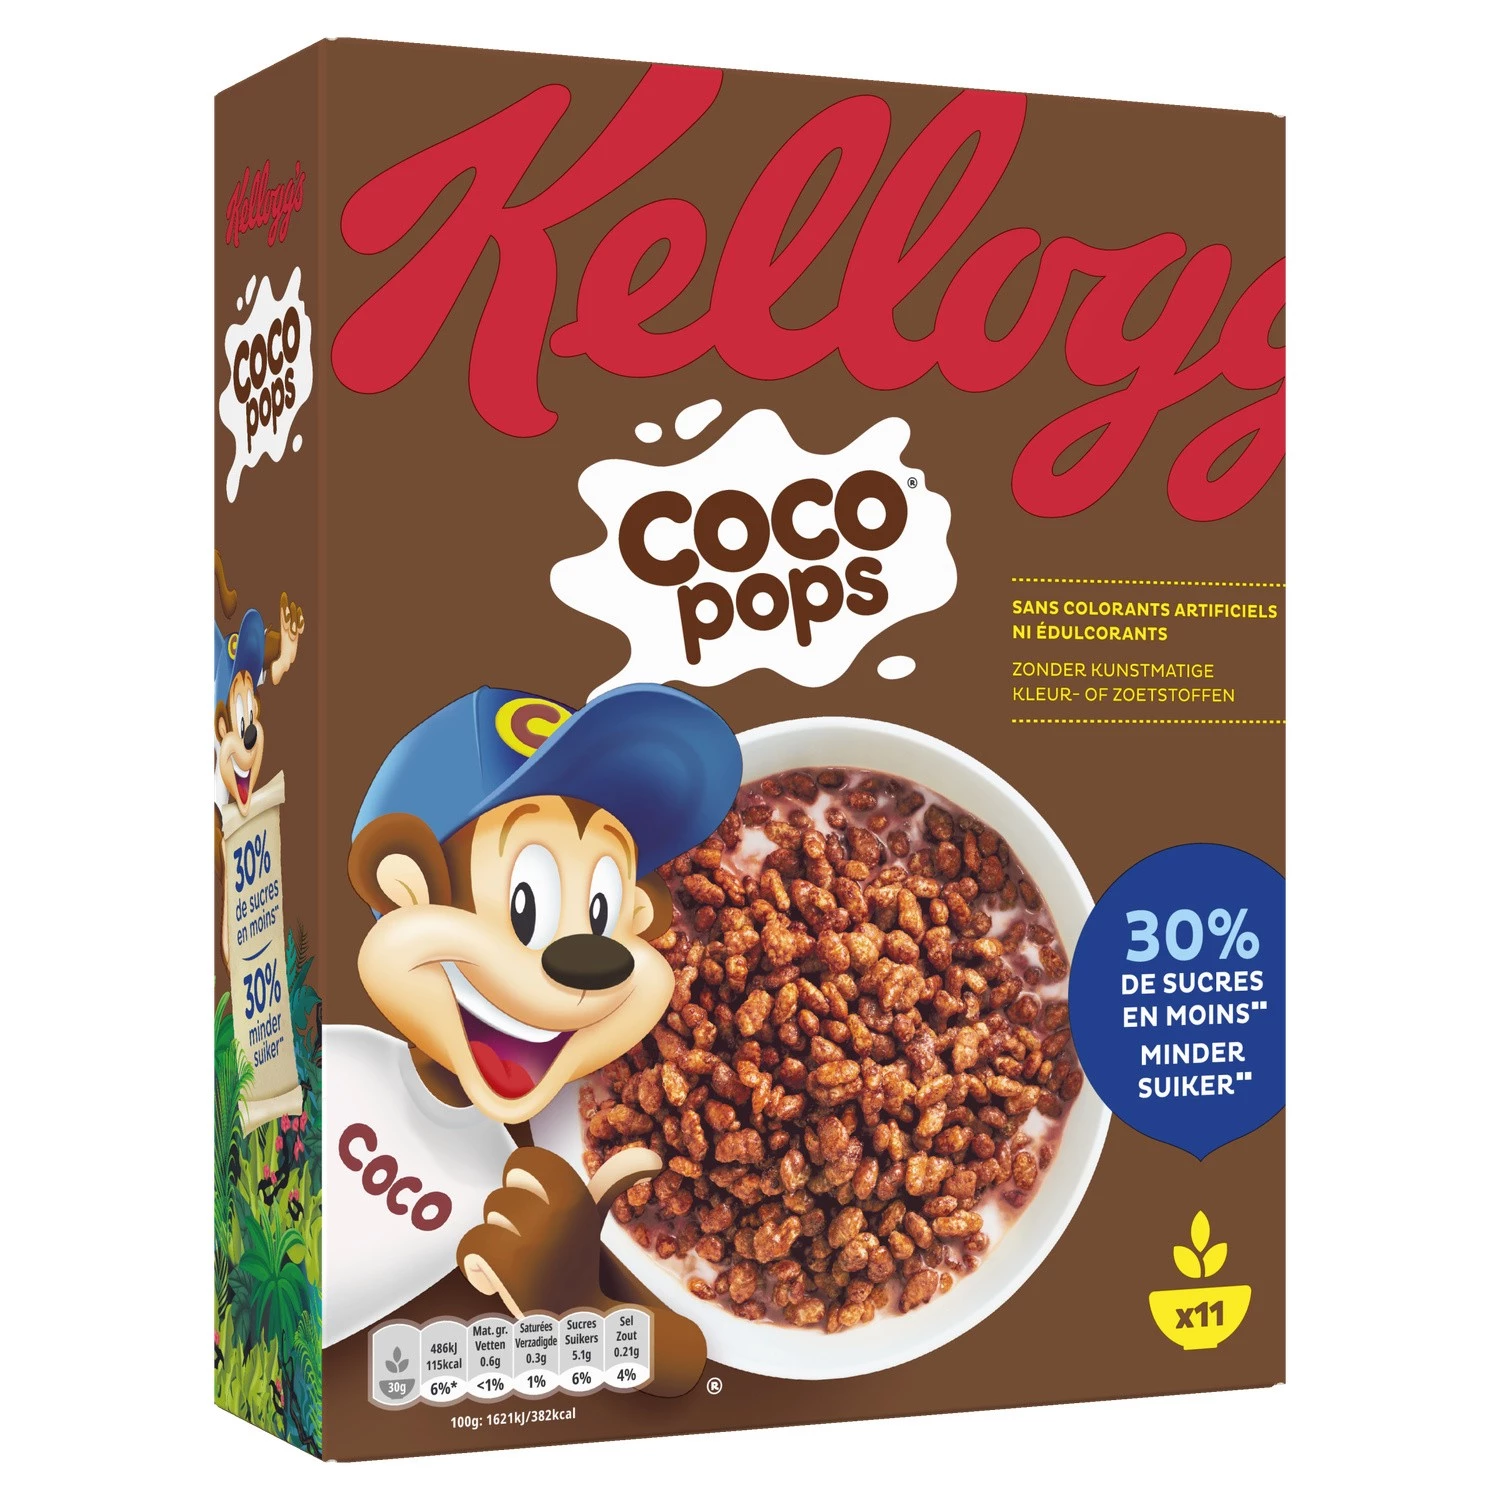 Coco Pops 原味巧克力麦片 350g - KELLOGG'S